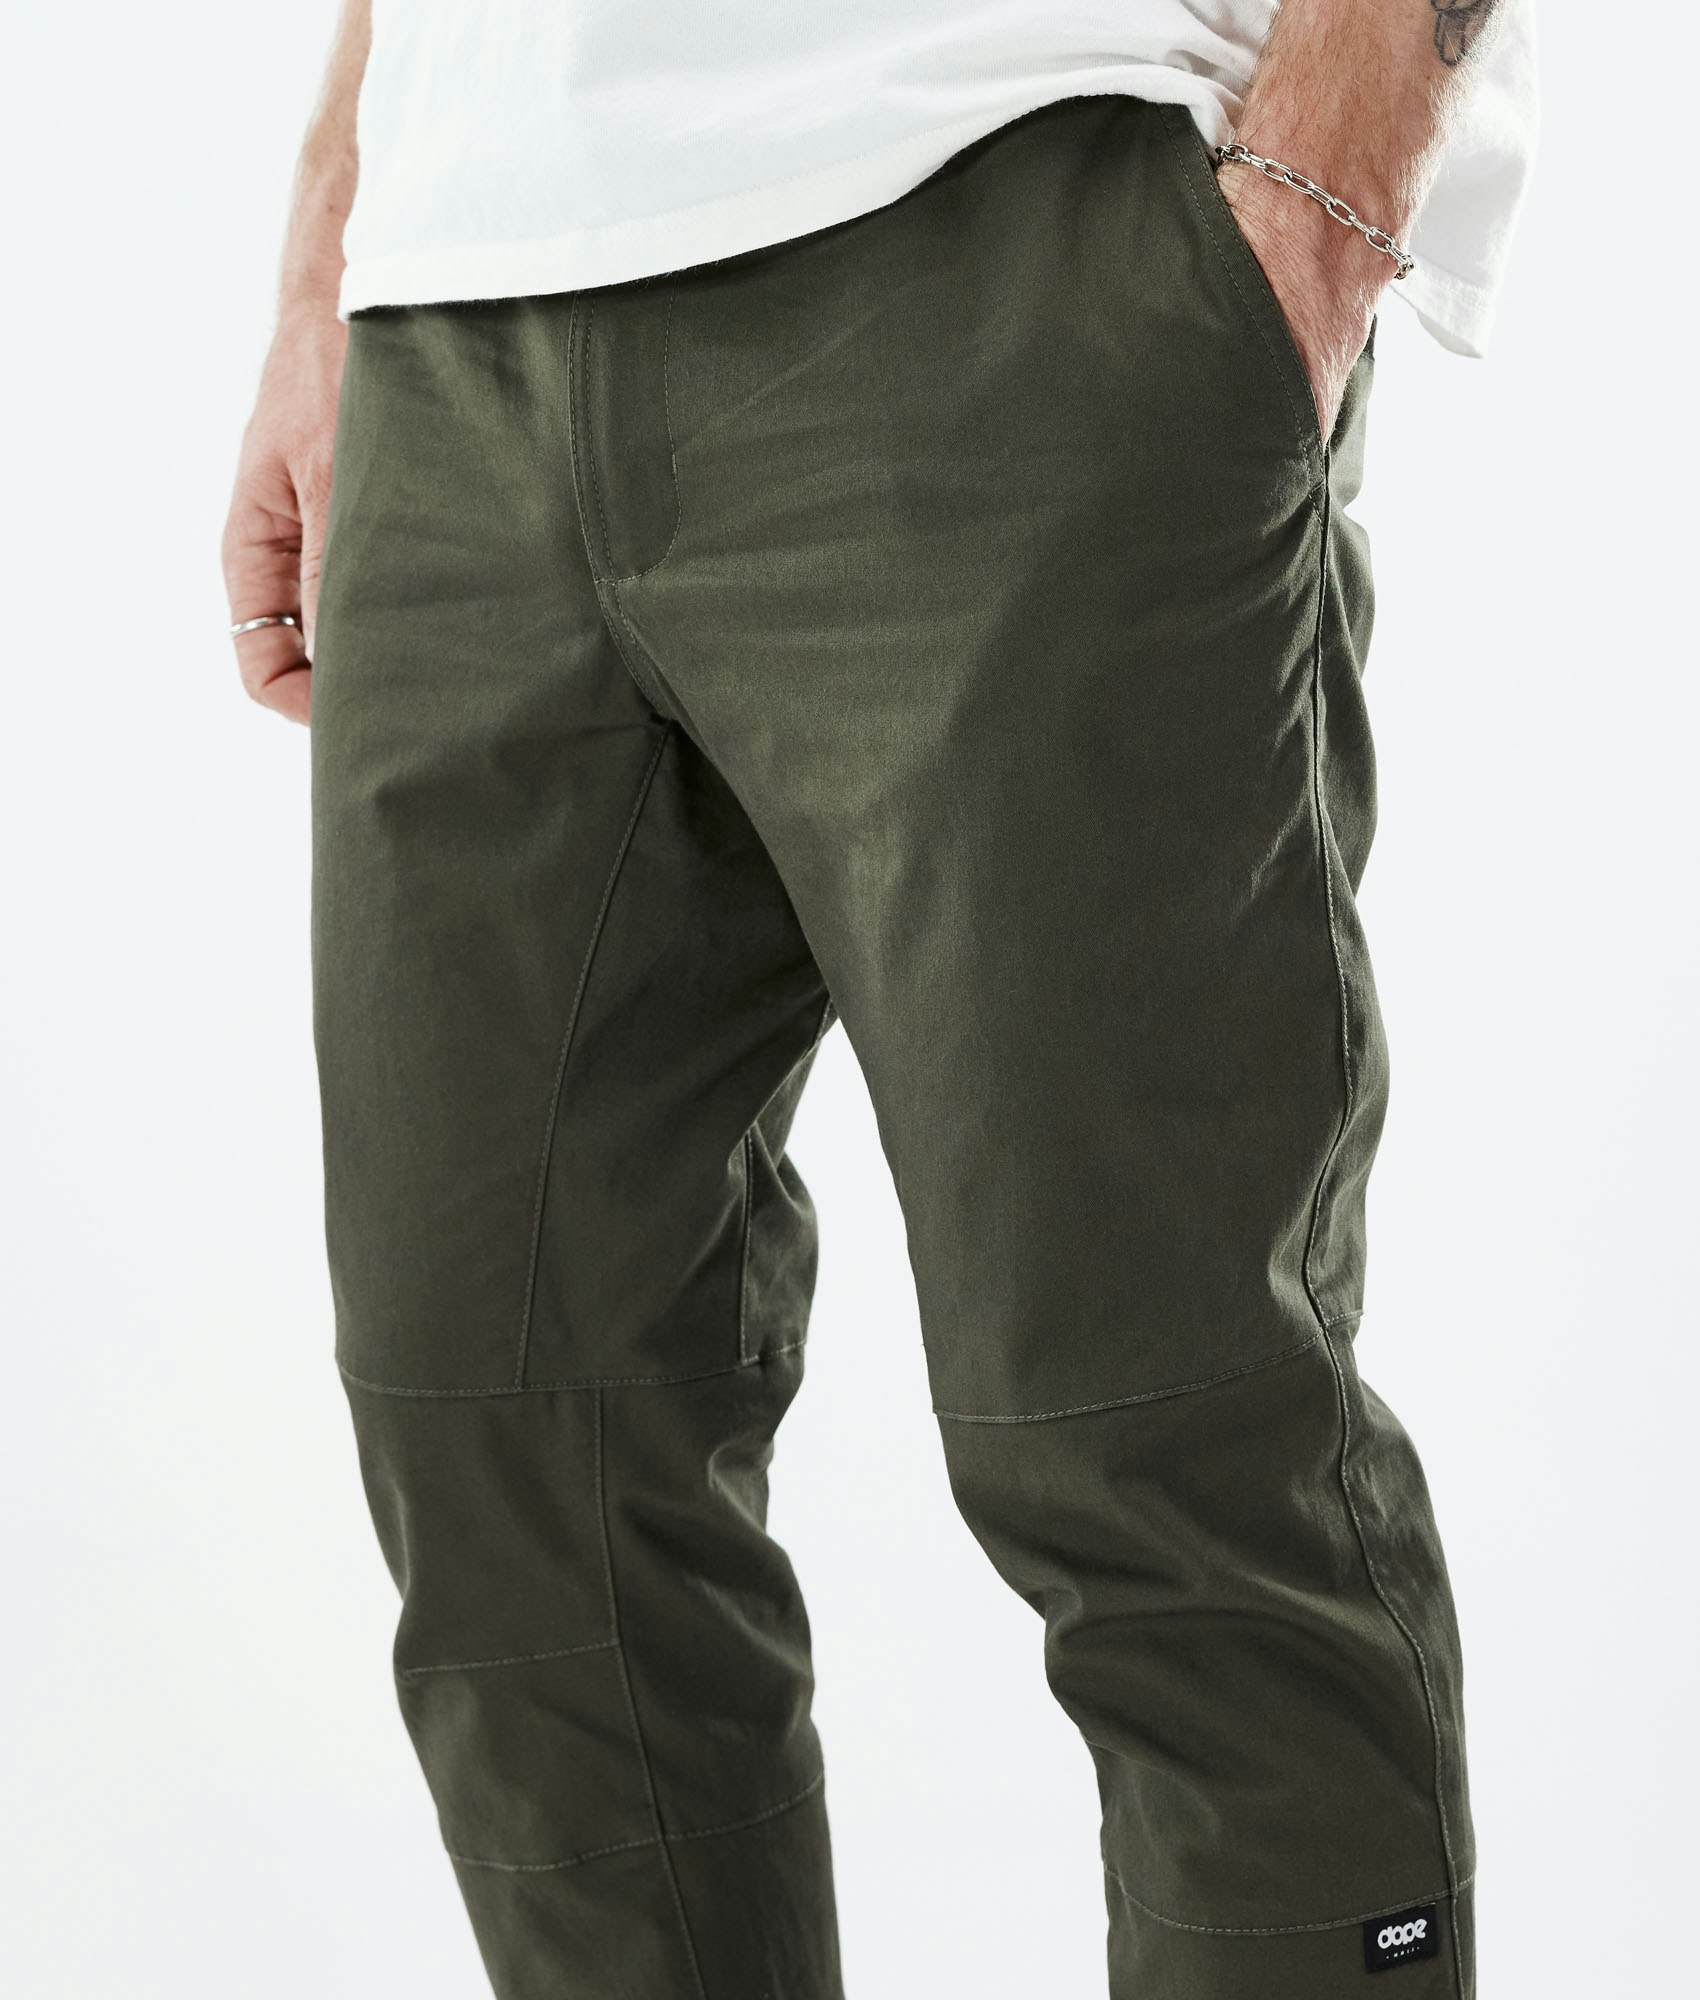 Vila tie waist wide leg pants in dark olive green | ASOS